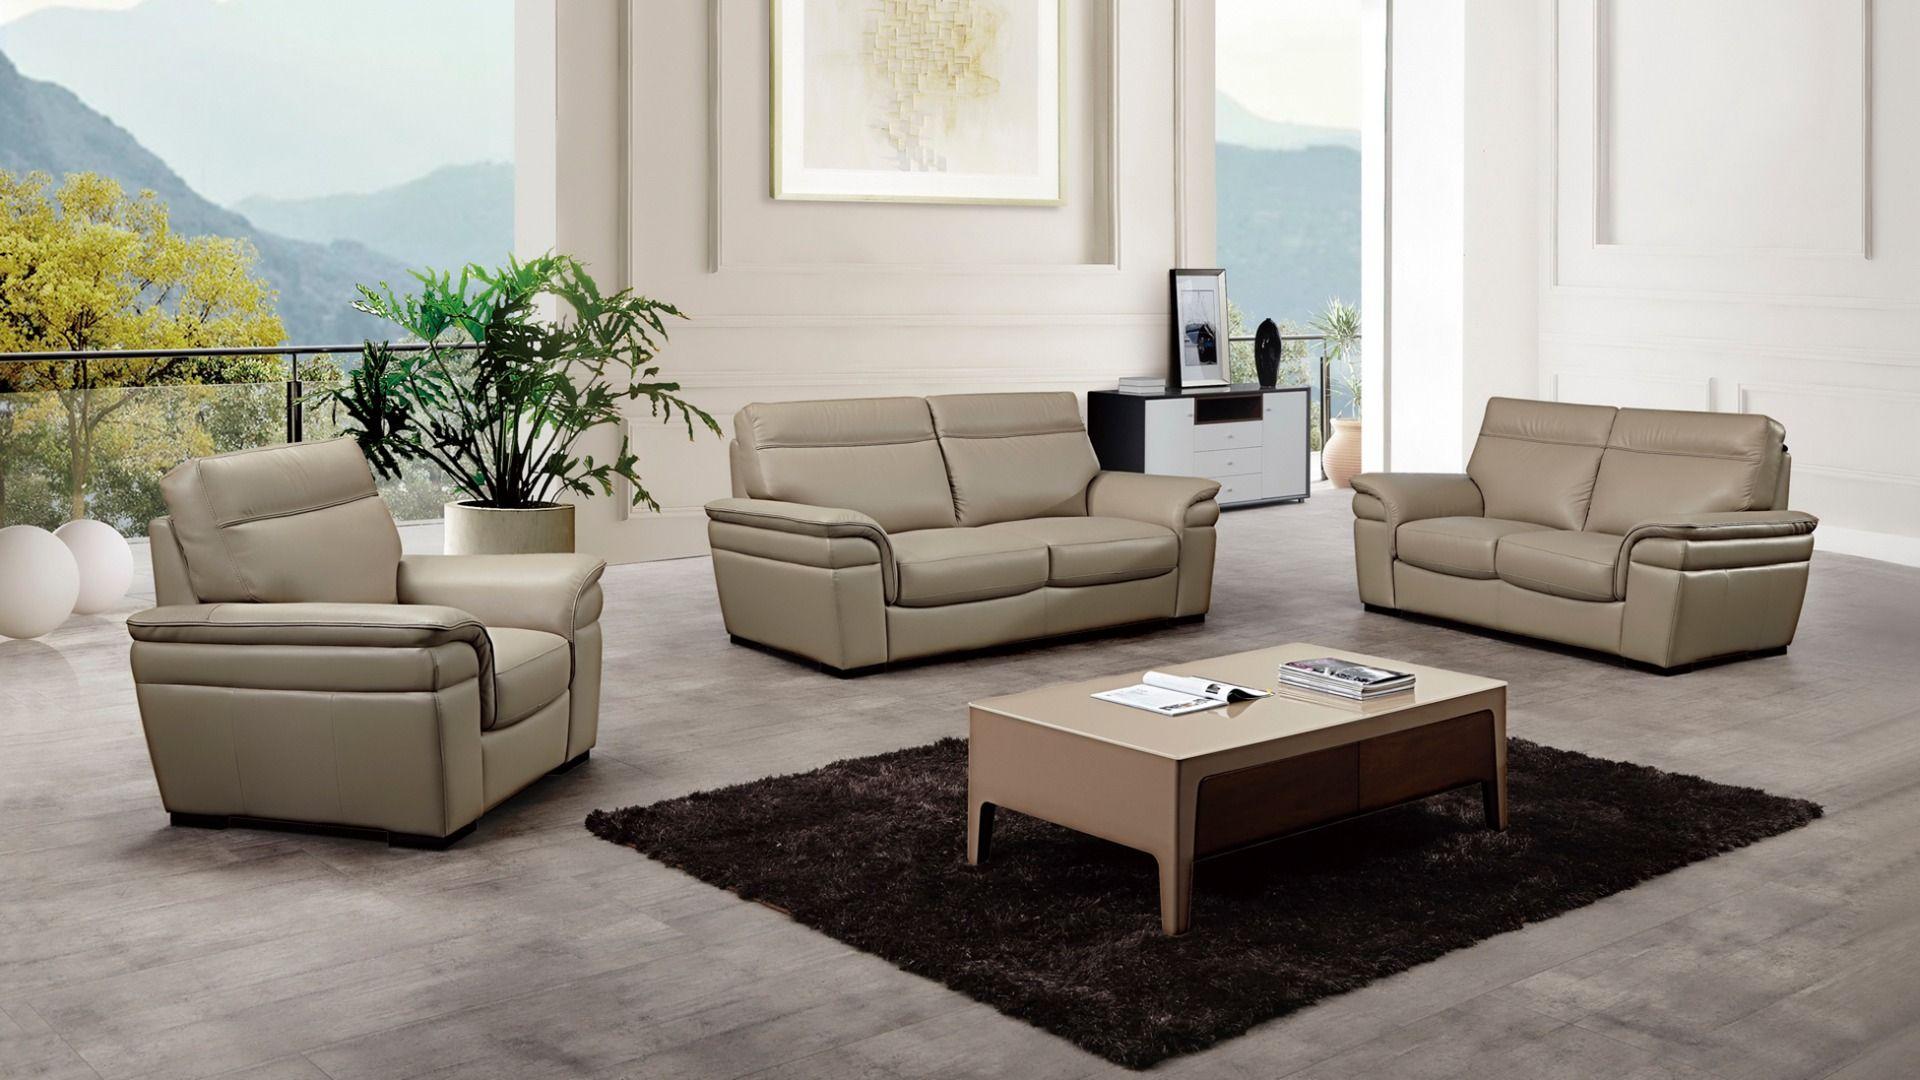 

                    
American Eagle Furniture EK020-TAN-LS Loveseat Tan Italian Leather Purchase 
